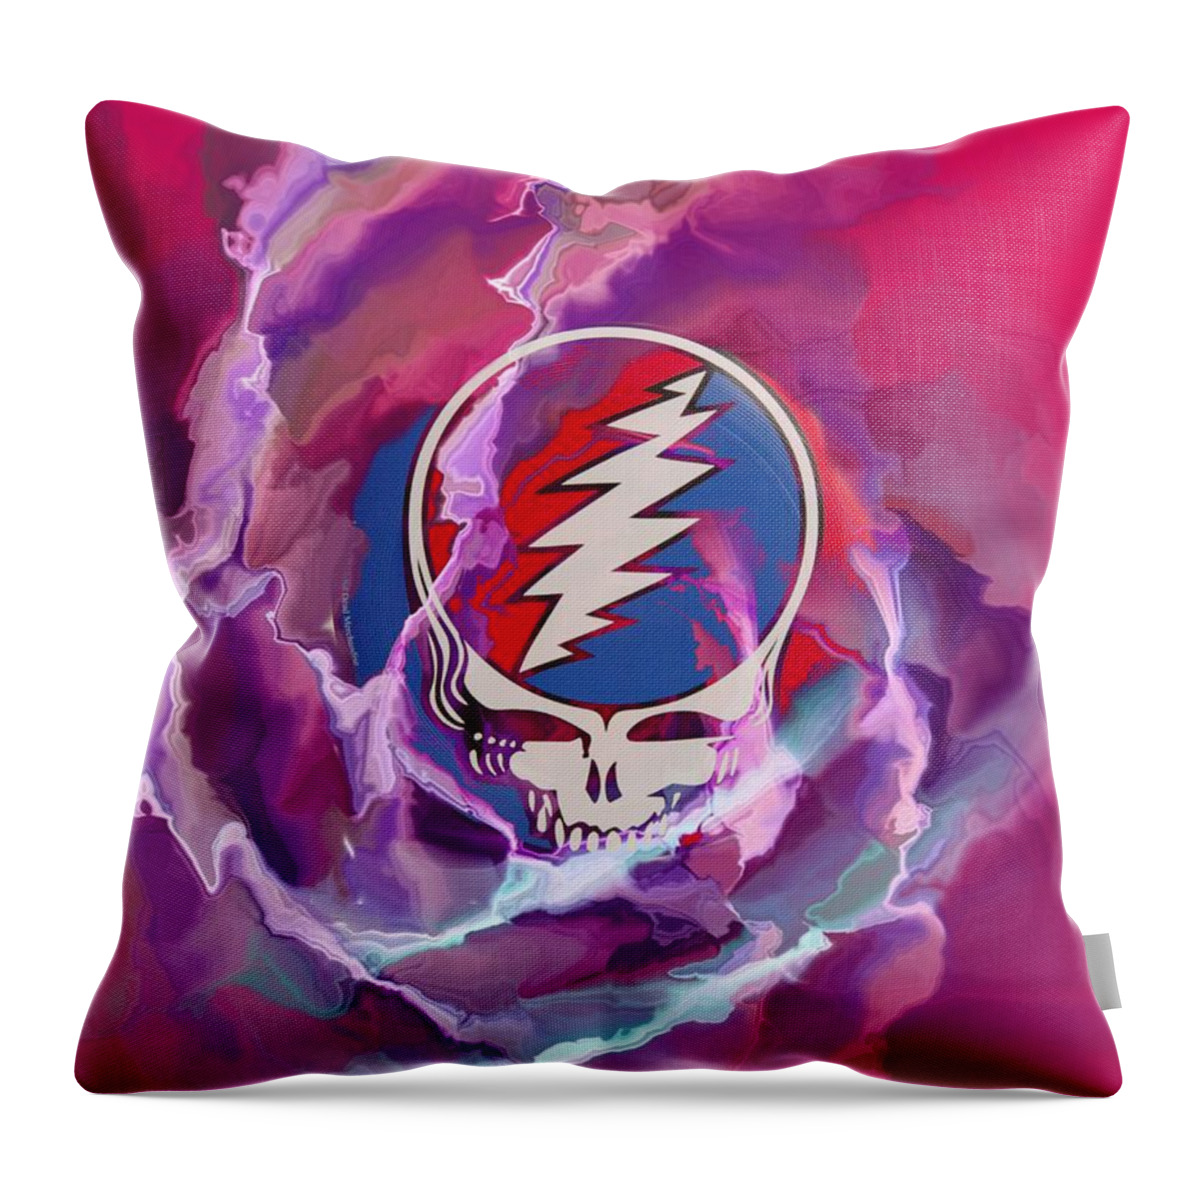 Grateful Dead Throw Pillow featuring the digital art Greatful Rose by David Lane